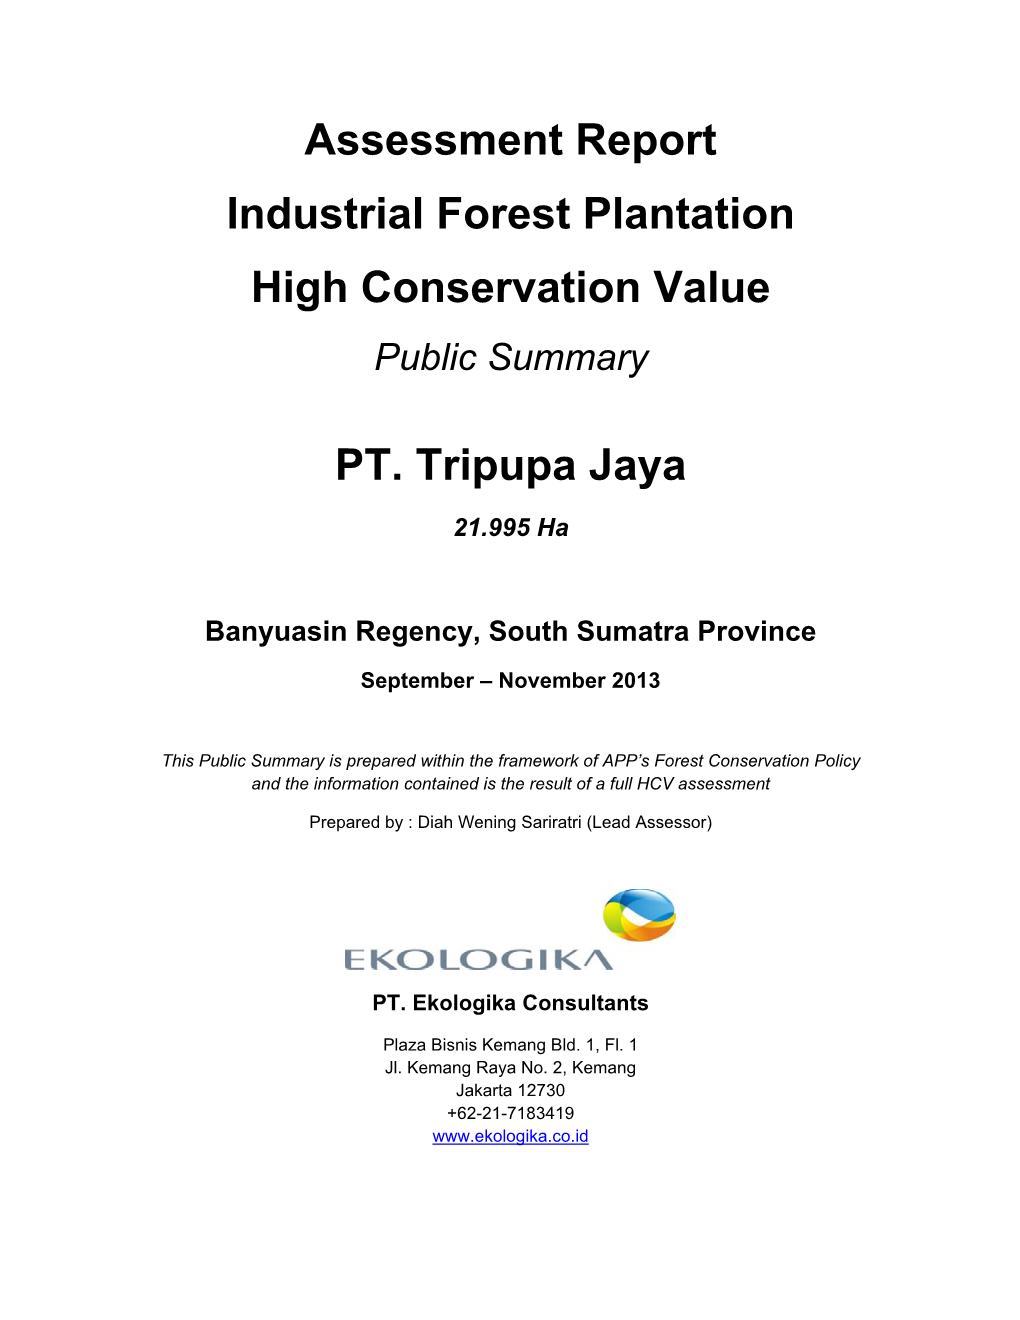 Assessment Report Industrial Forest Plantation High Conservation Value